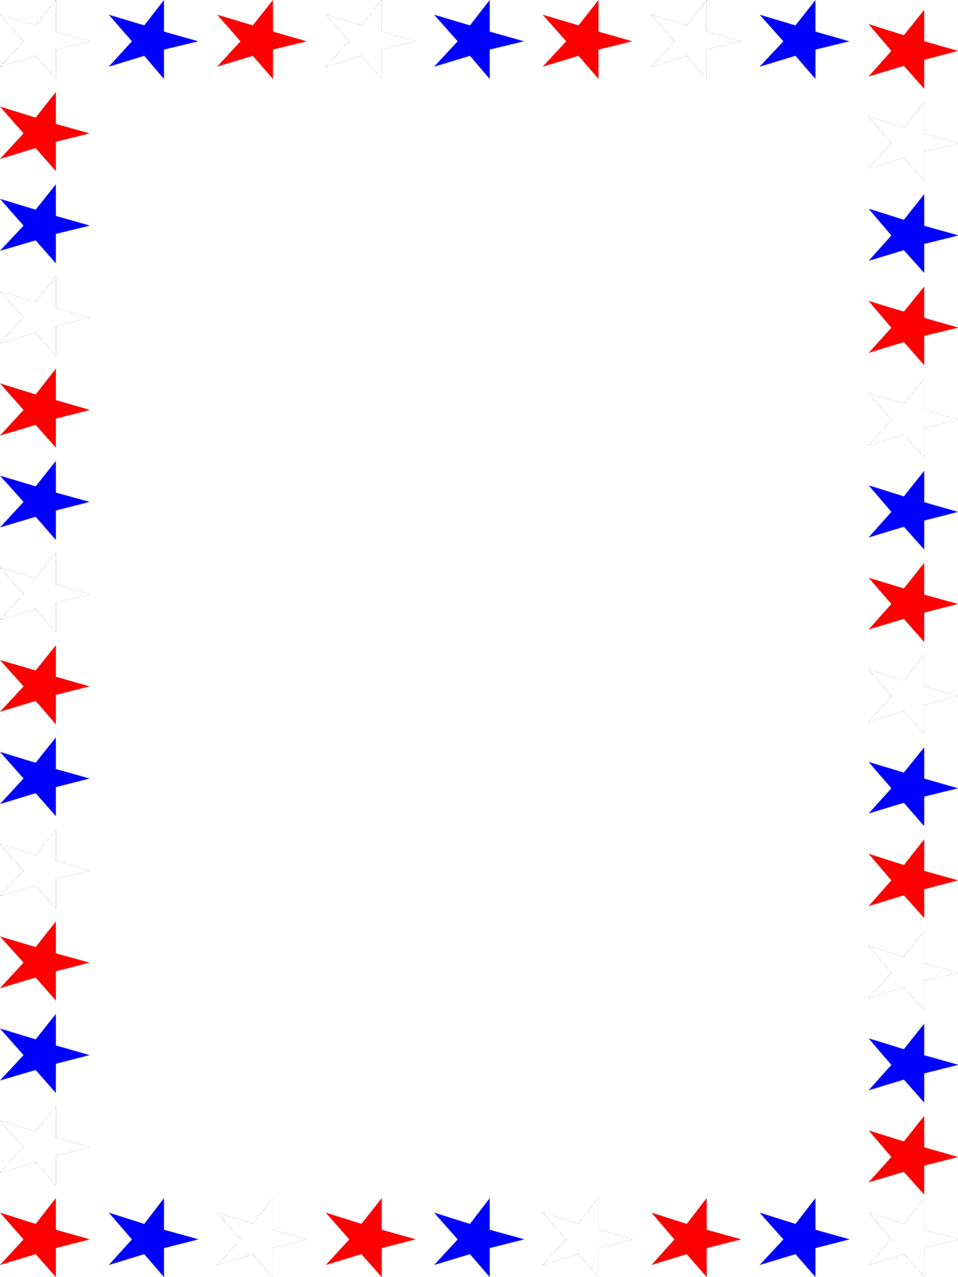  illustration of a. Stars border png